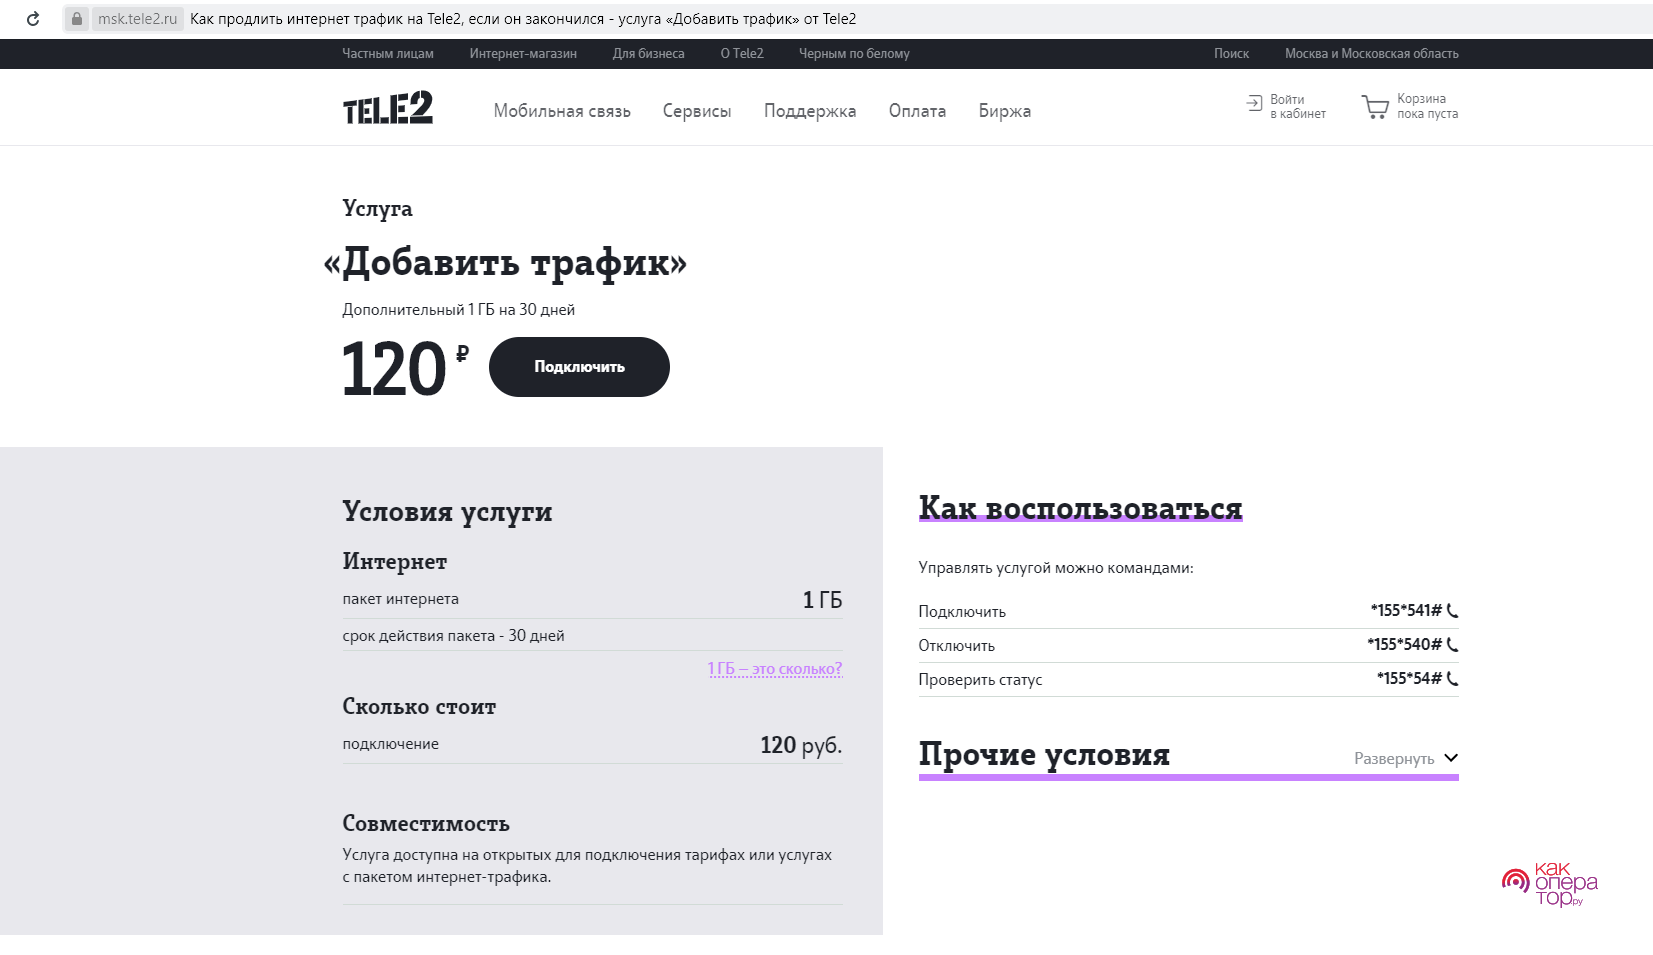 Как подключить услугу «500 мб» за 50, 55 рублей на теле2